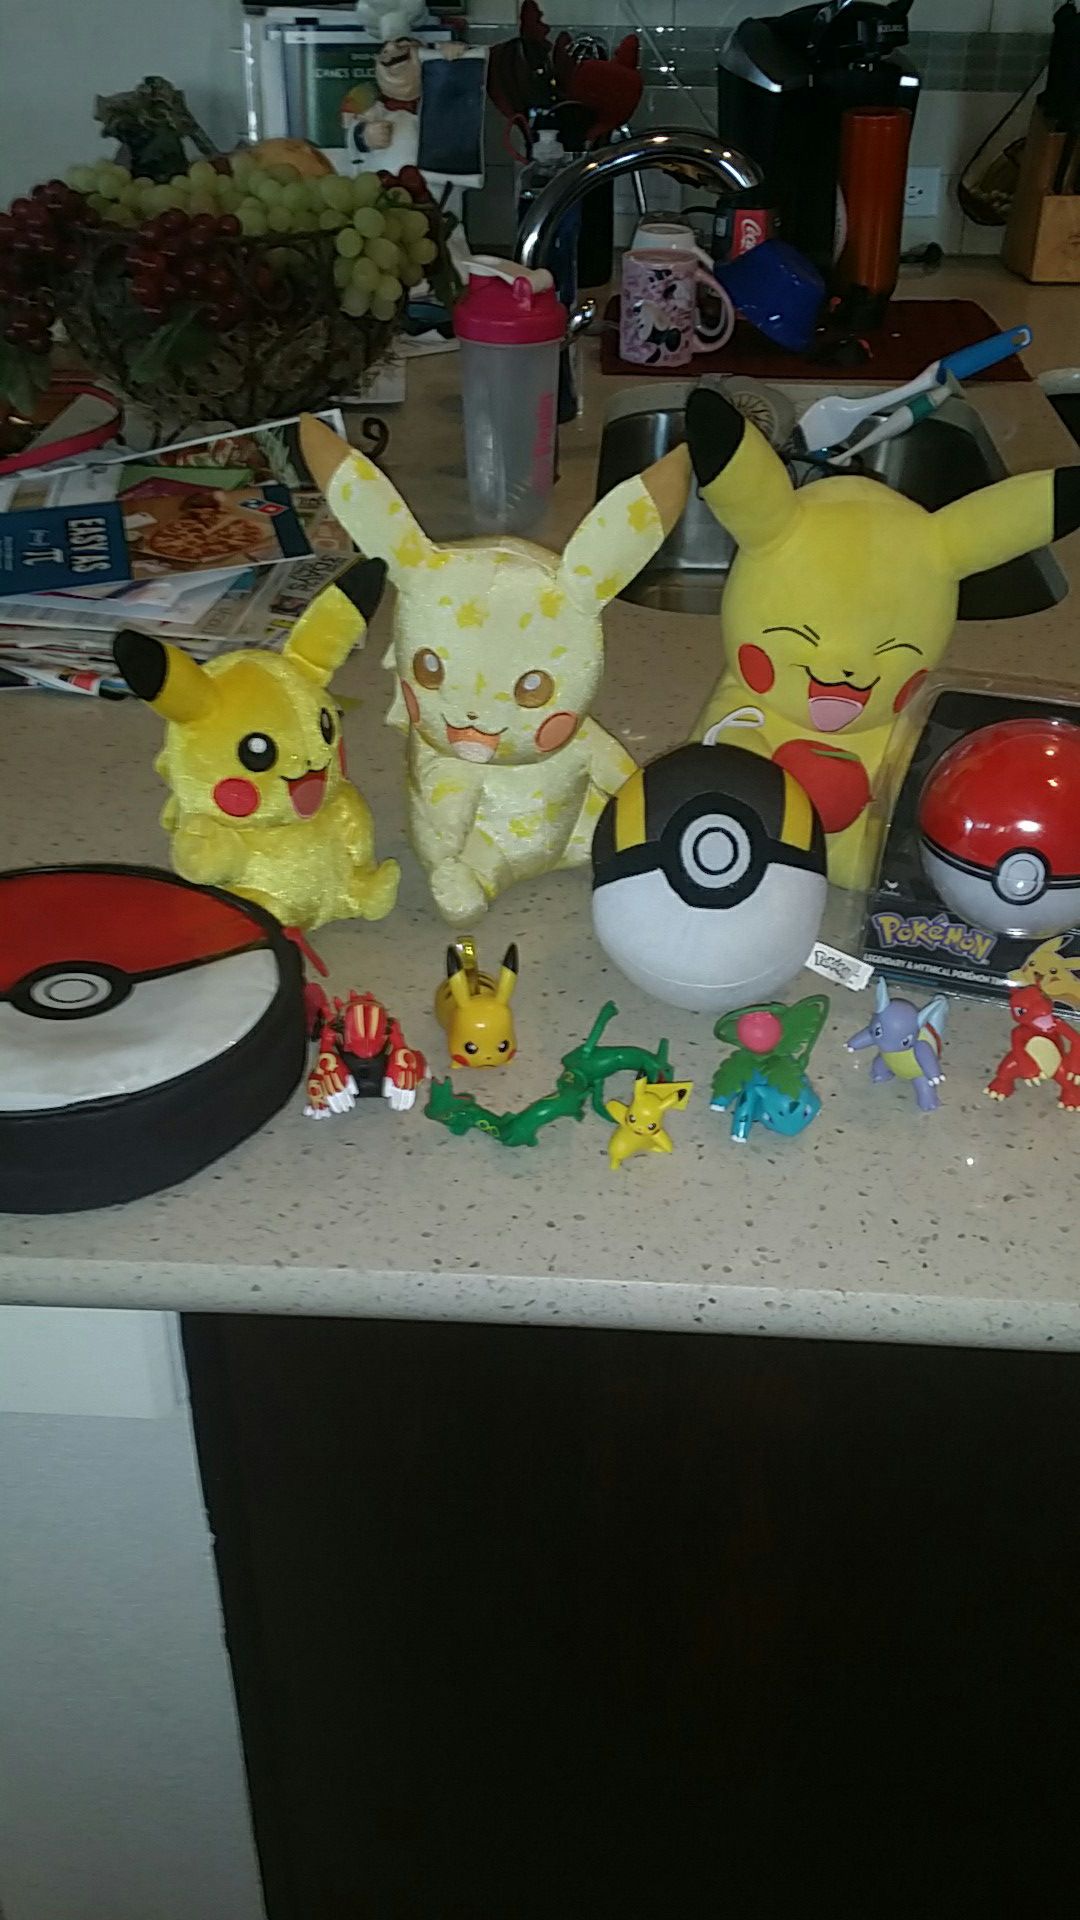 Pokémon items